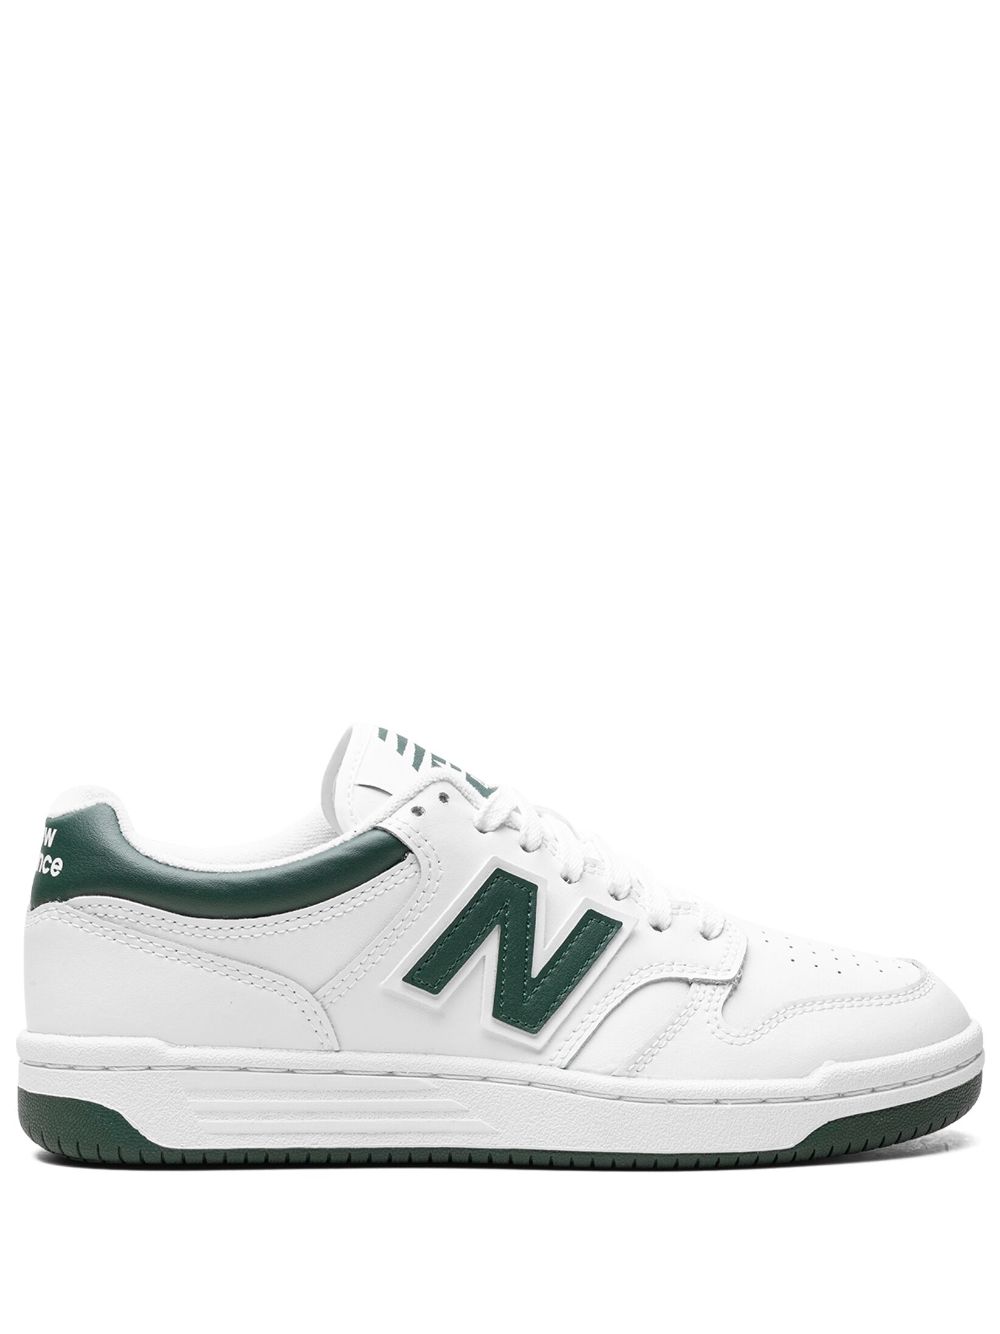 New Balance 480 "White/Nightwatch Green" sneakers